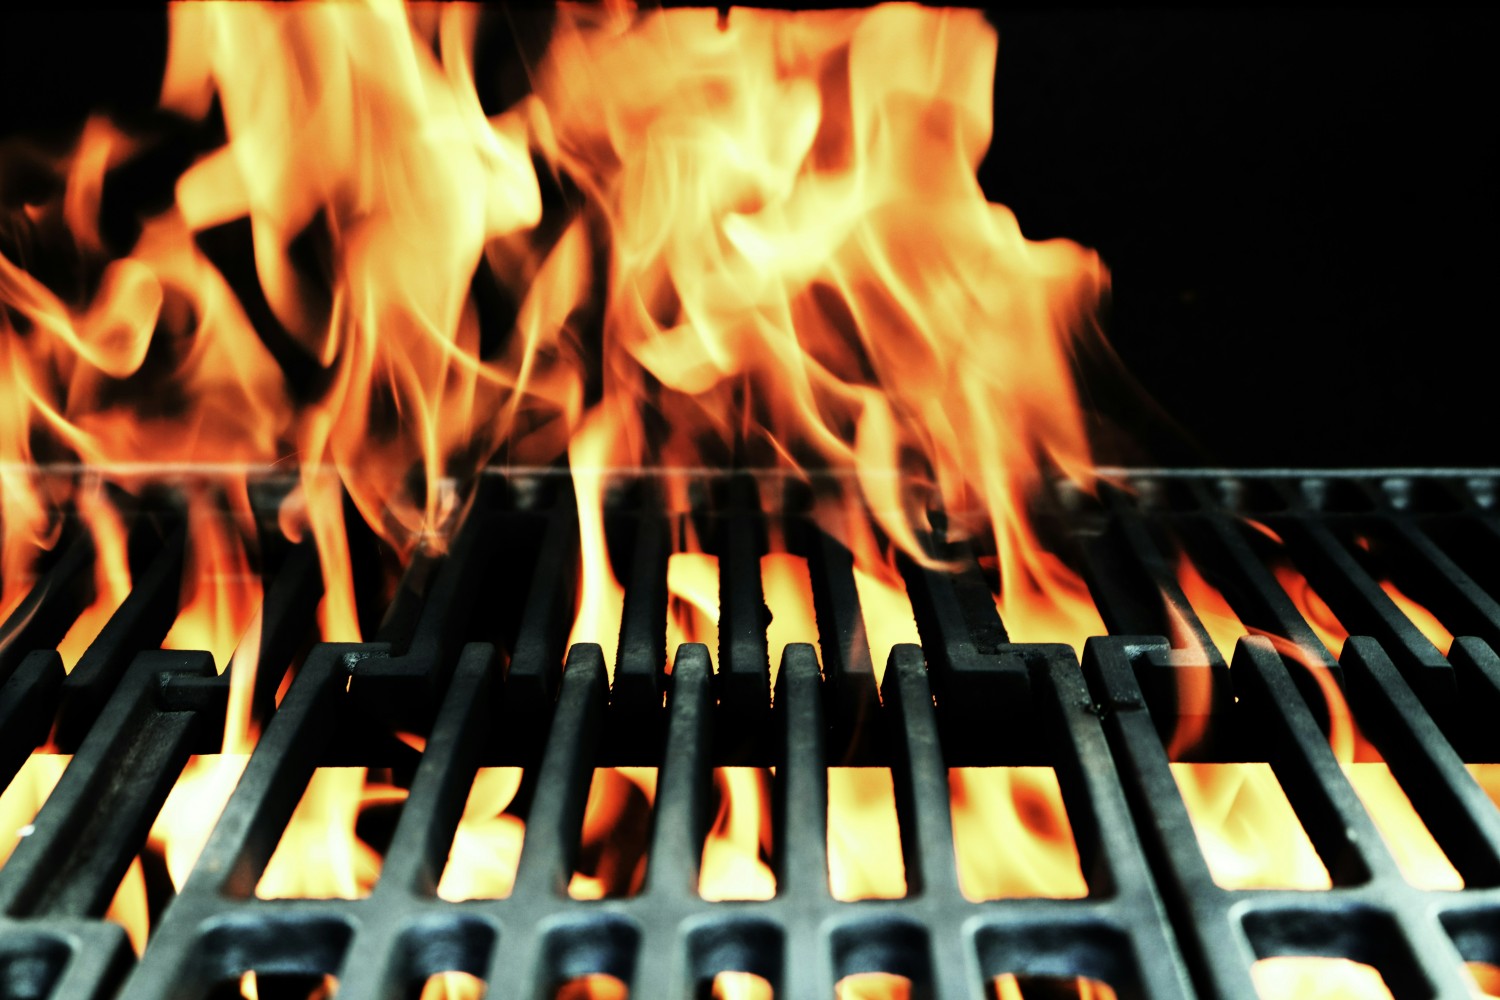 A fiery grill grate